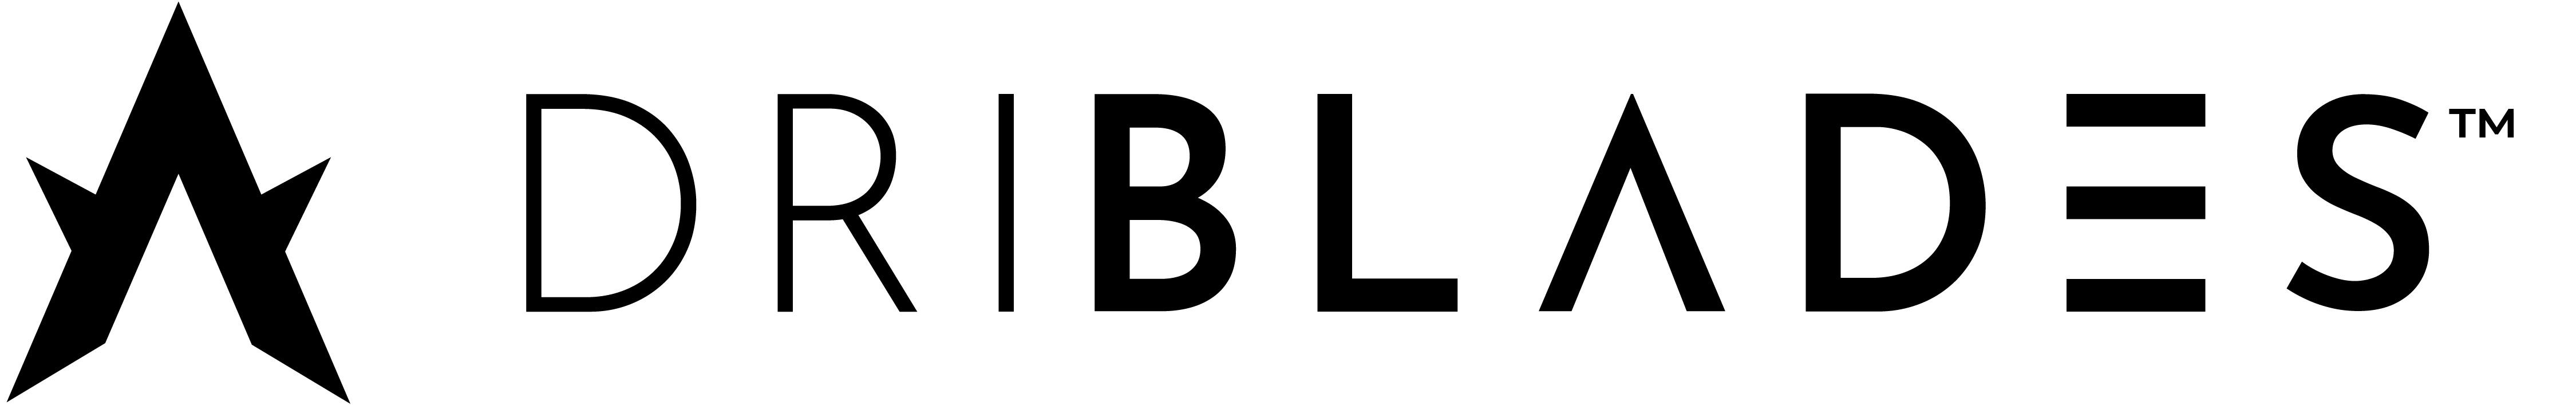 Driblades-Logo-Black-TM-1